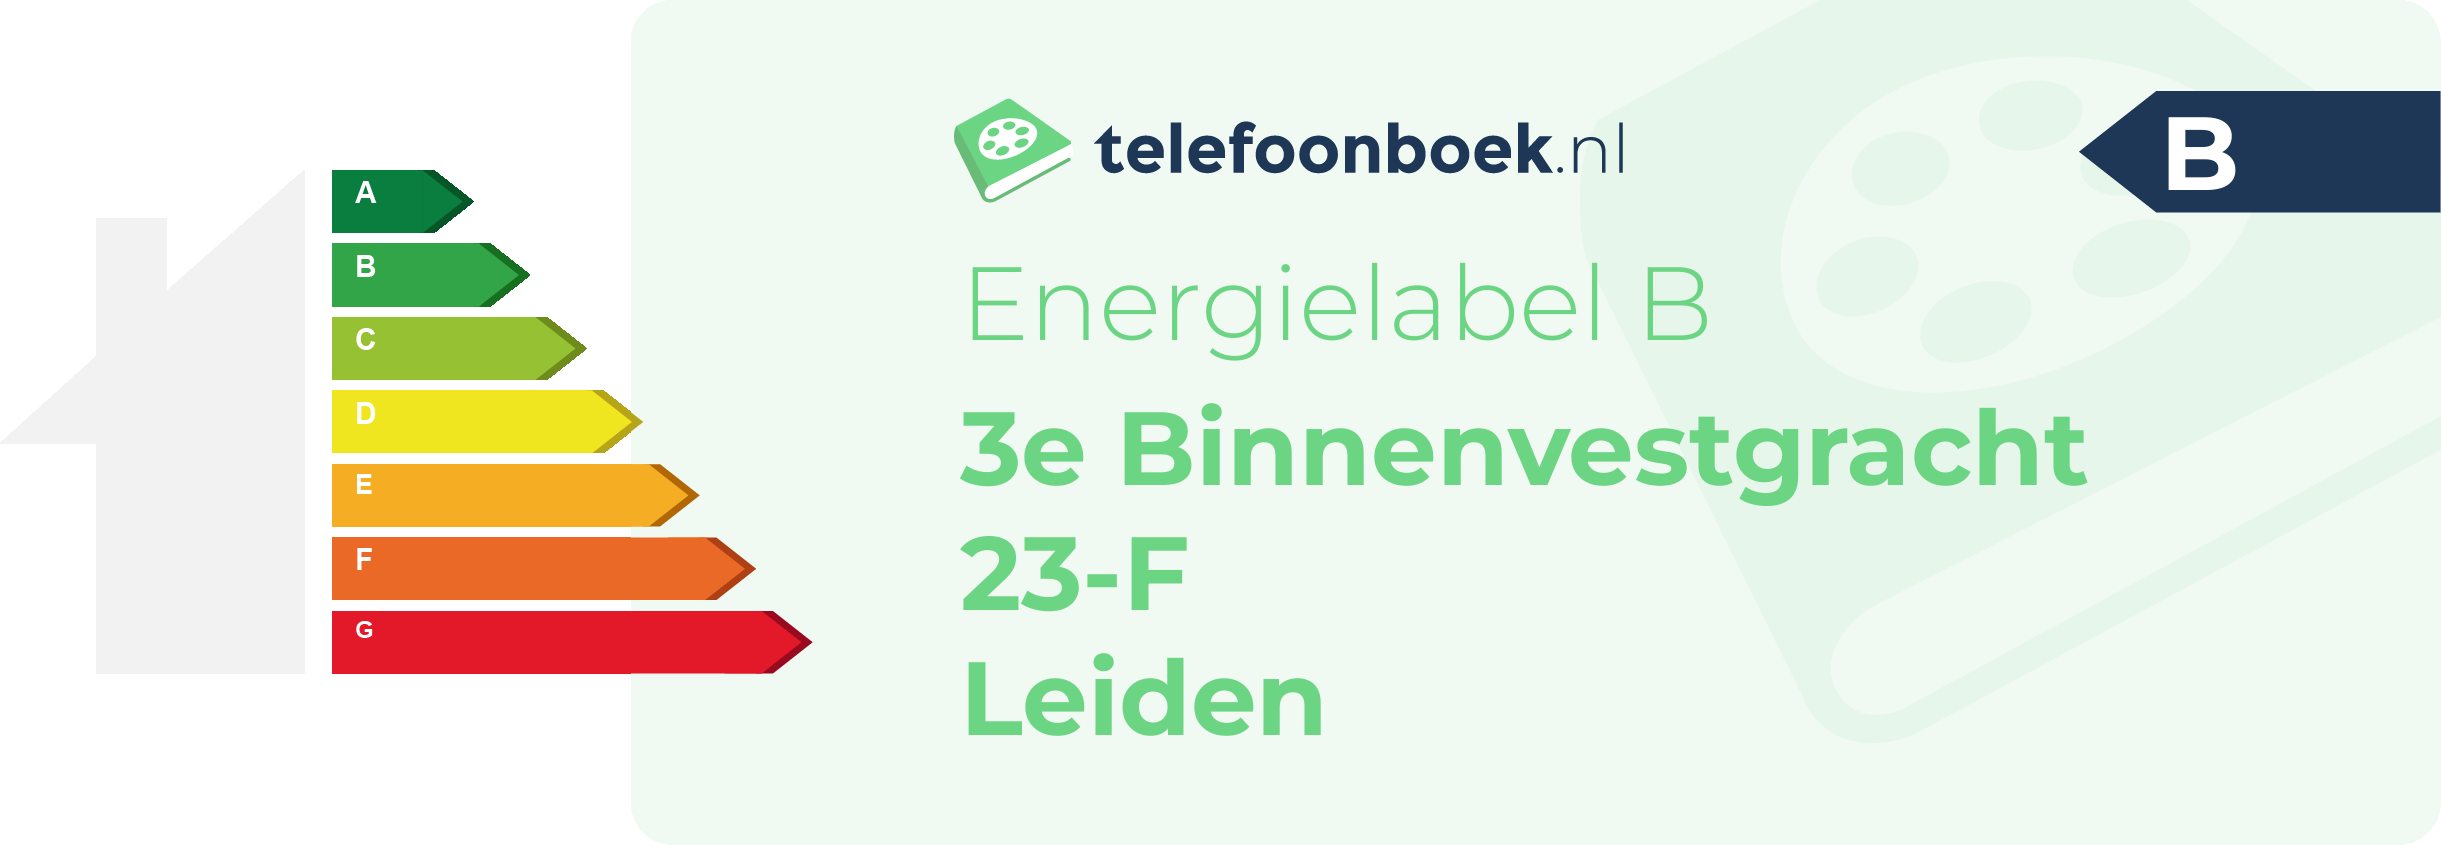 Energielabel 3e Binnenvestgracht 23-F Leiden